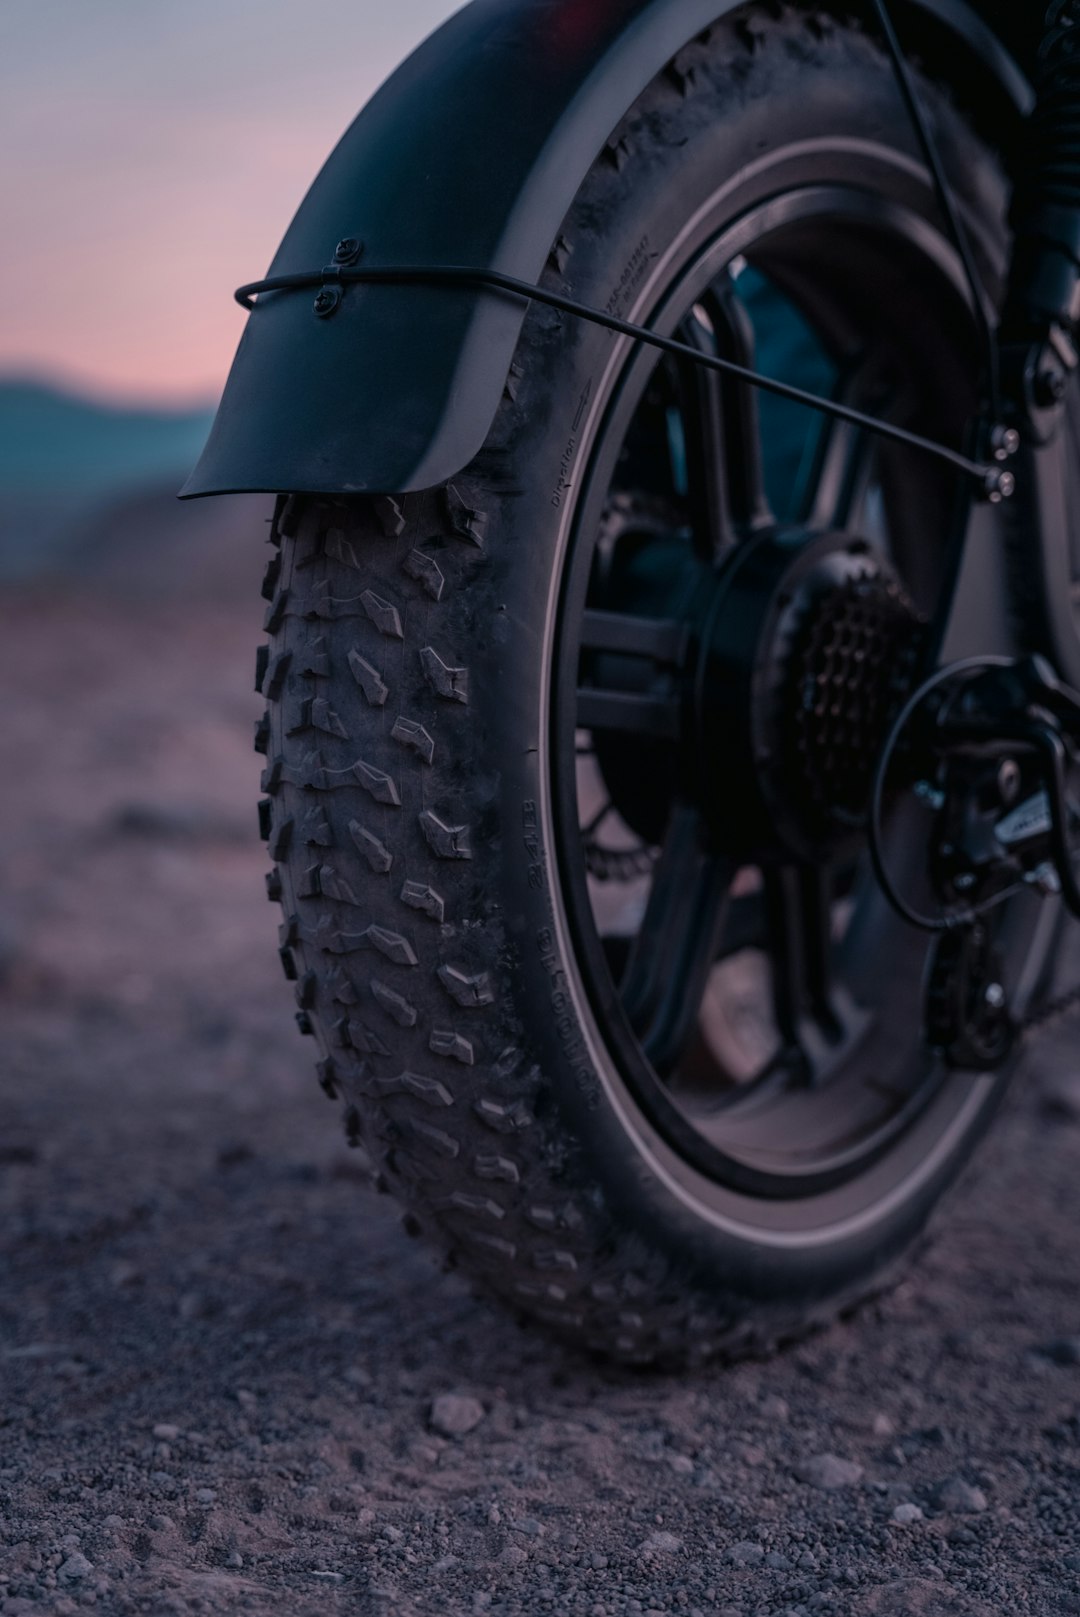 black motorcycle wheel on gray sand during daytime